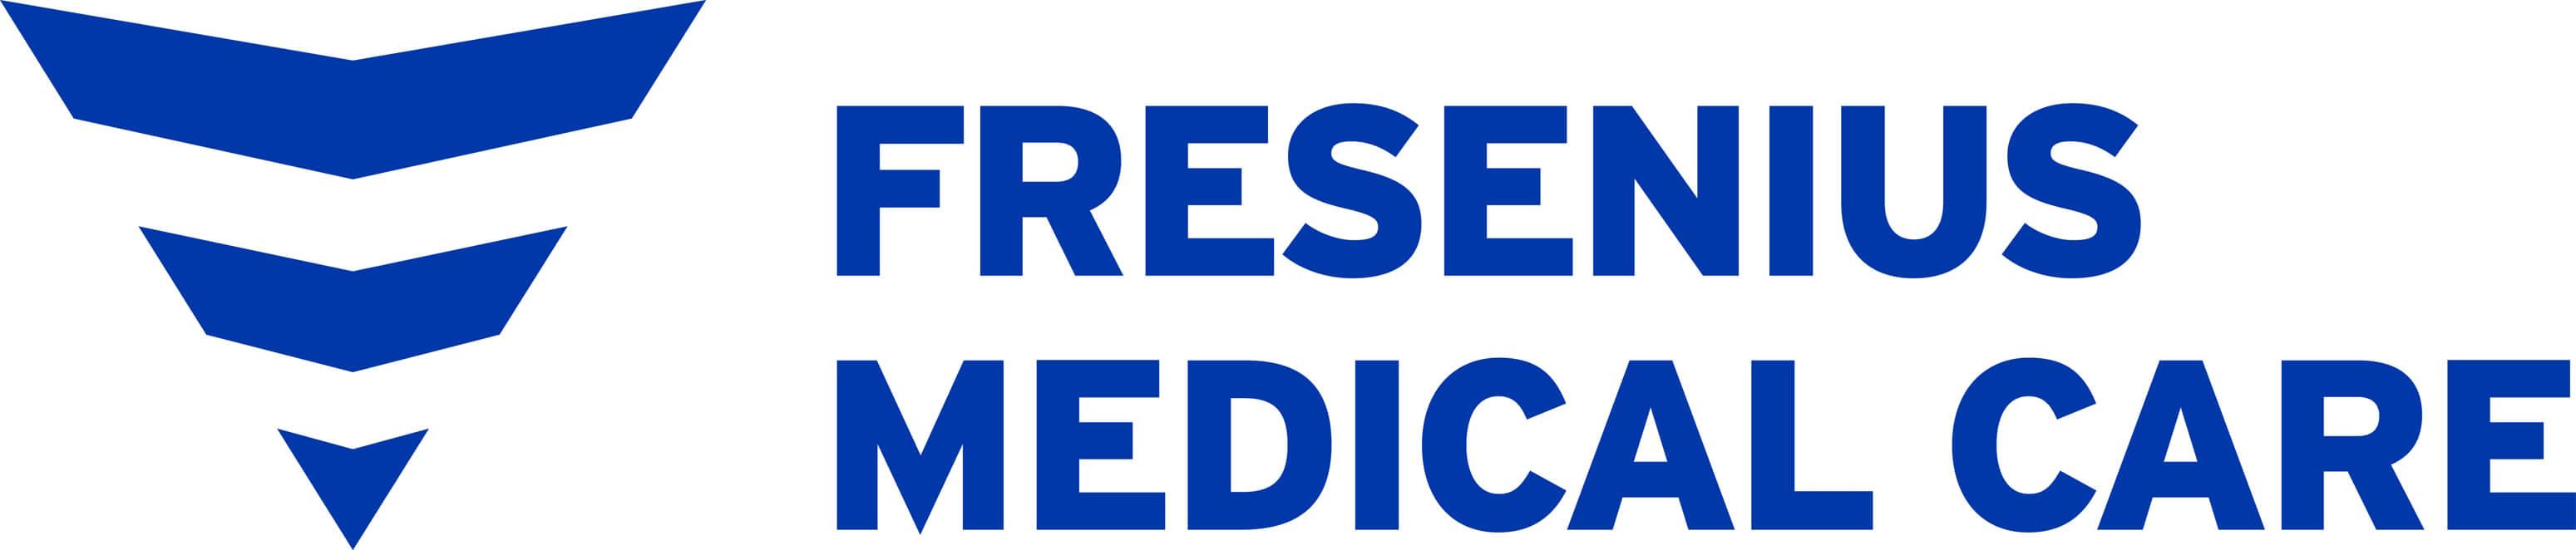 FMC Logo - FMC Logo Associates Medical Group